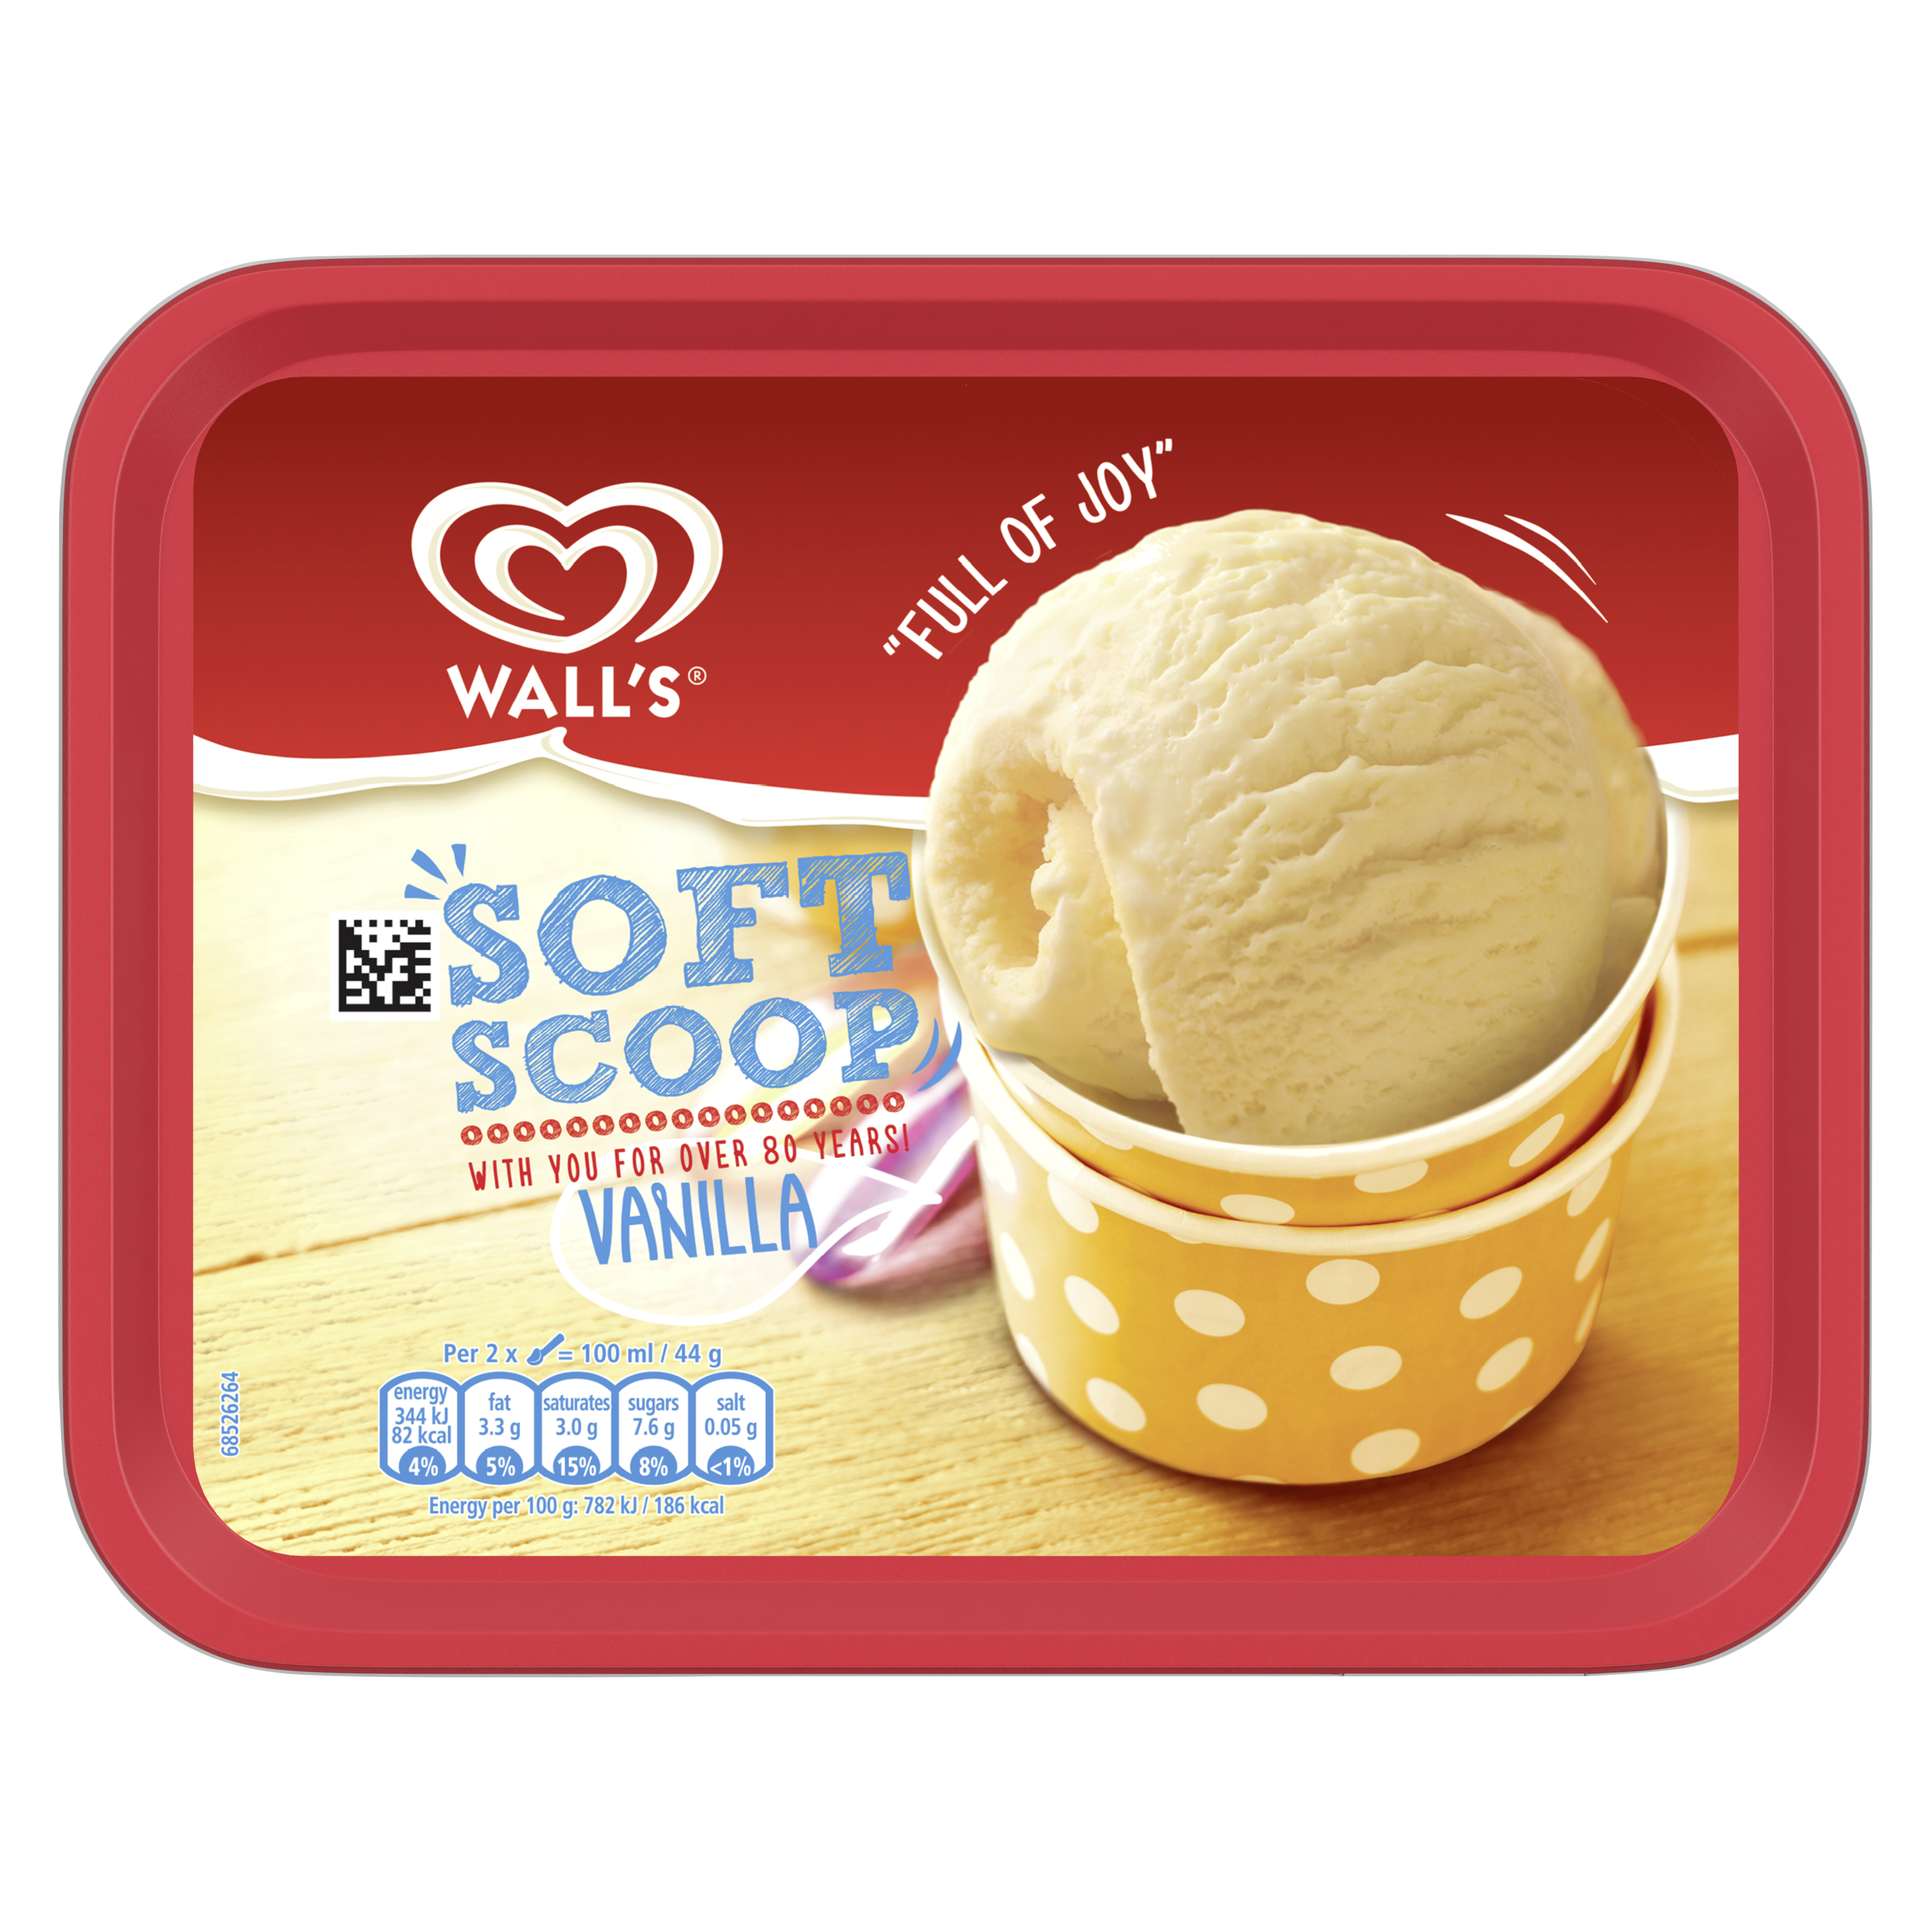 Wall's Soft Scoop Vanilla 1800ml